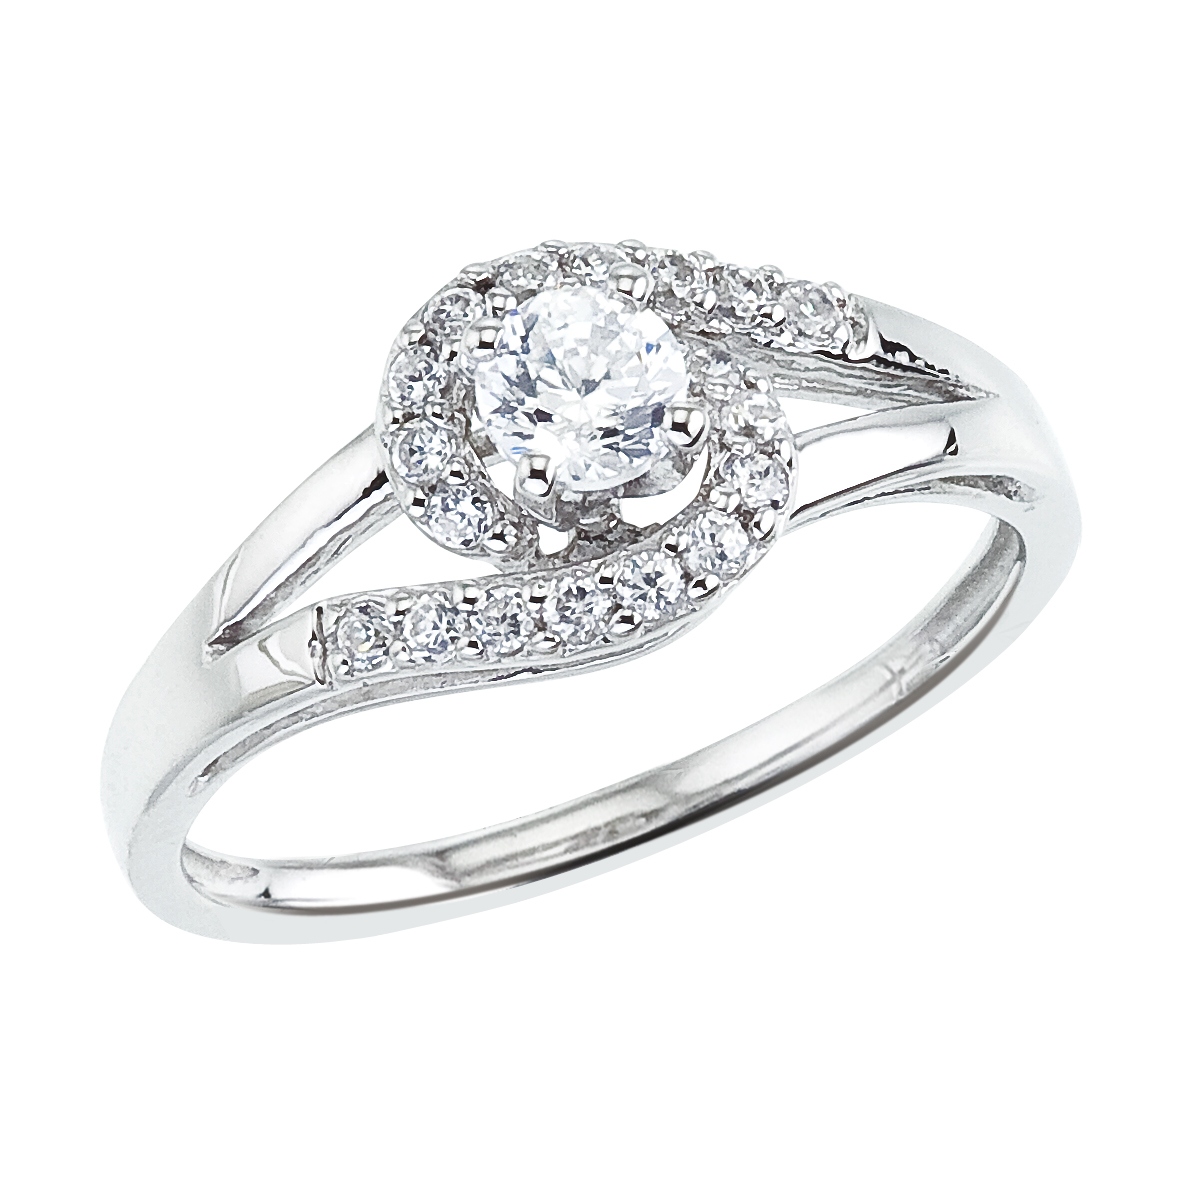 14k White gold Channel-Set Diamond QPID Engagement Ring (0.24 tcw)